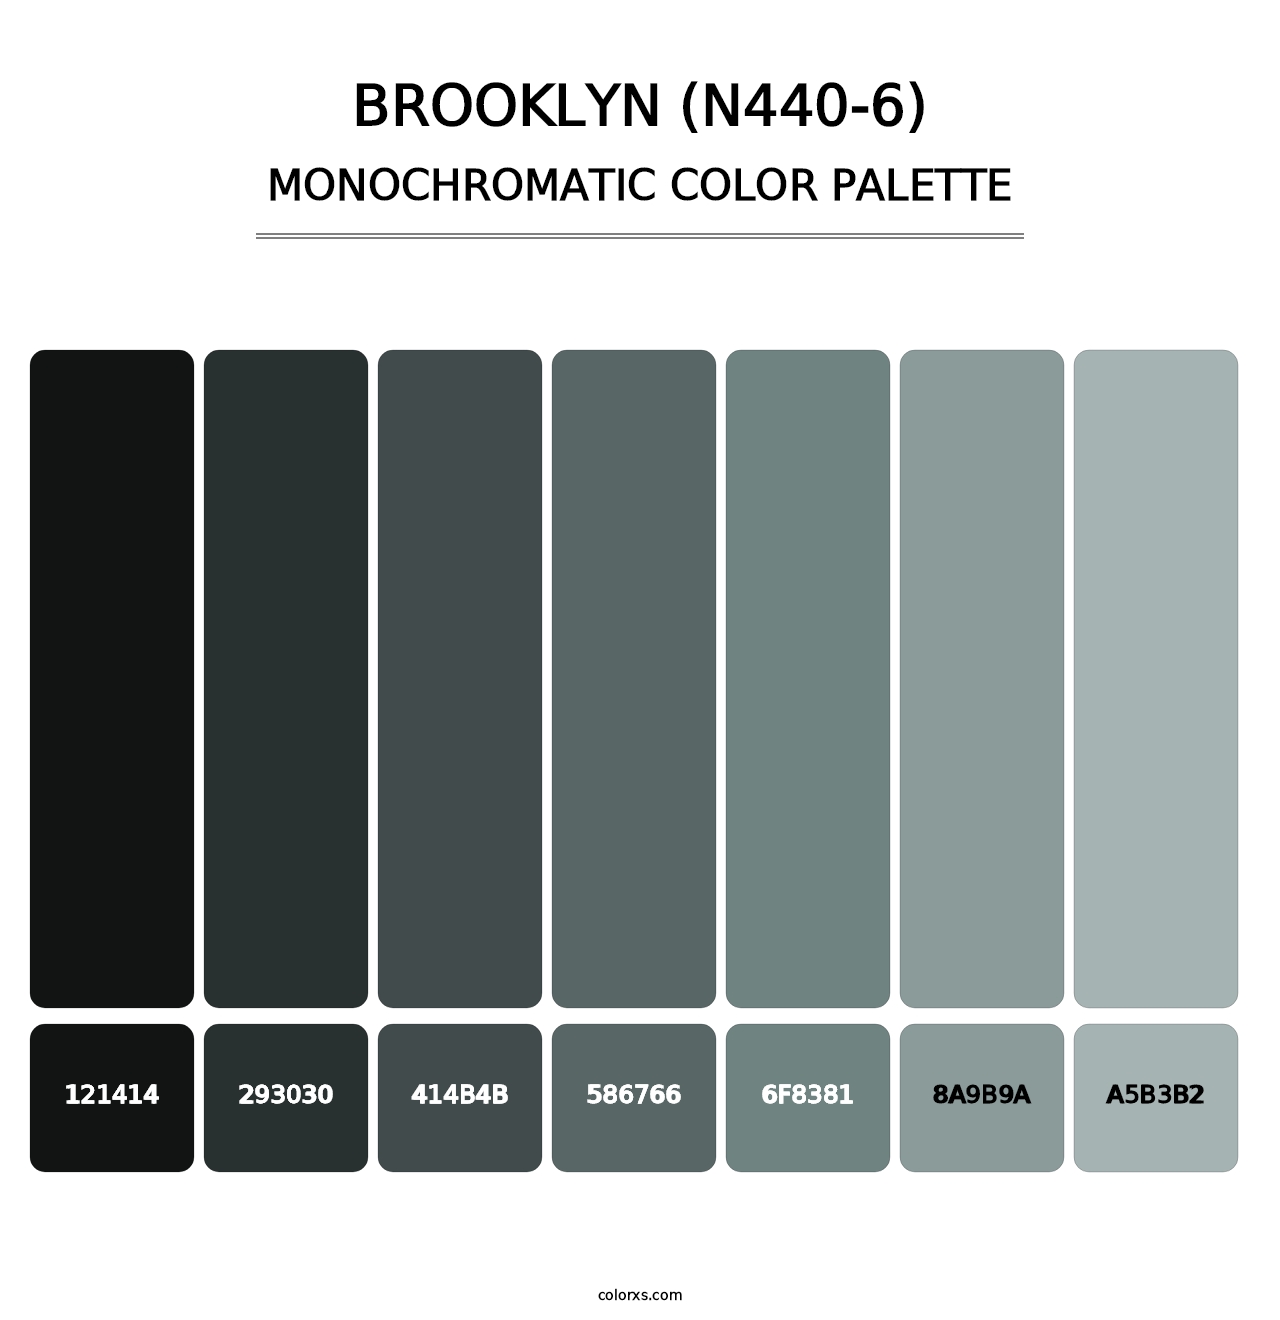 Brooklyn (N440-6) - Monochromatic Color Palette